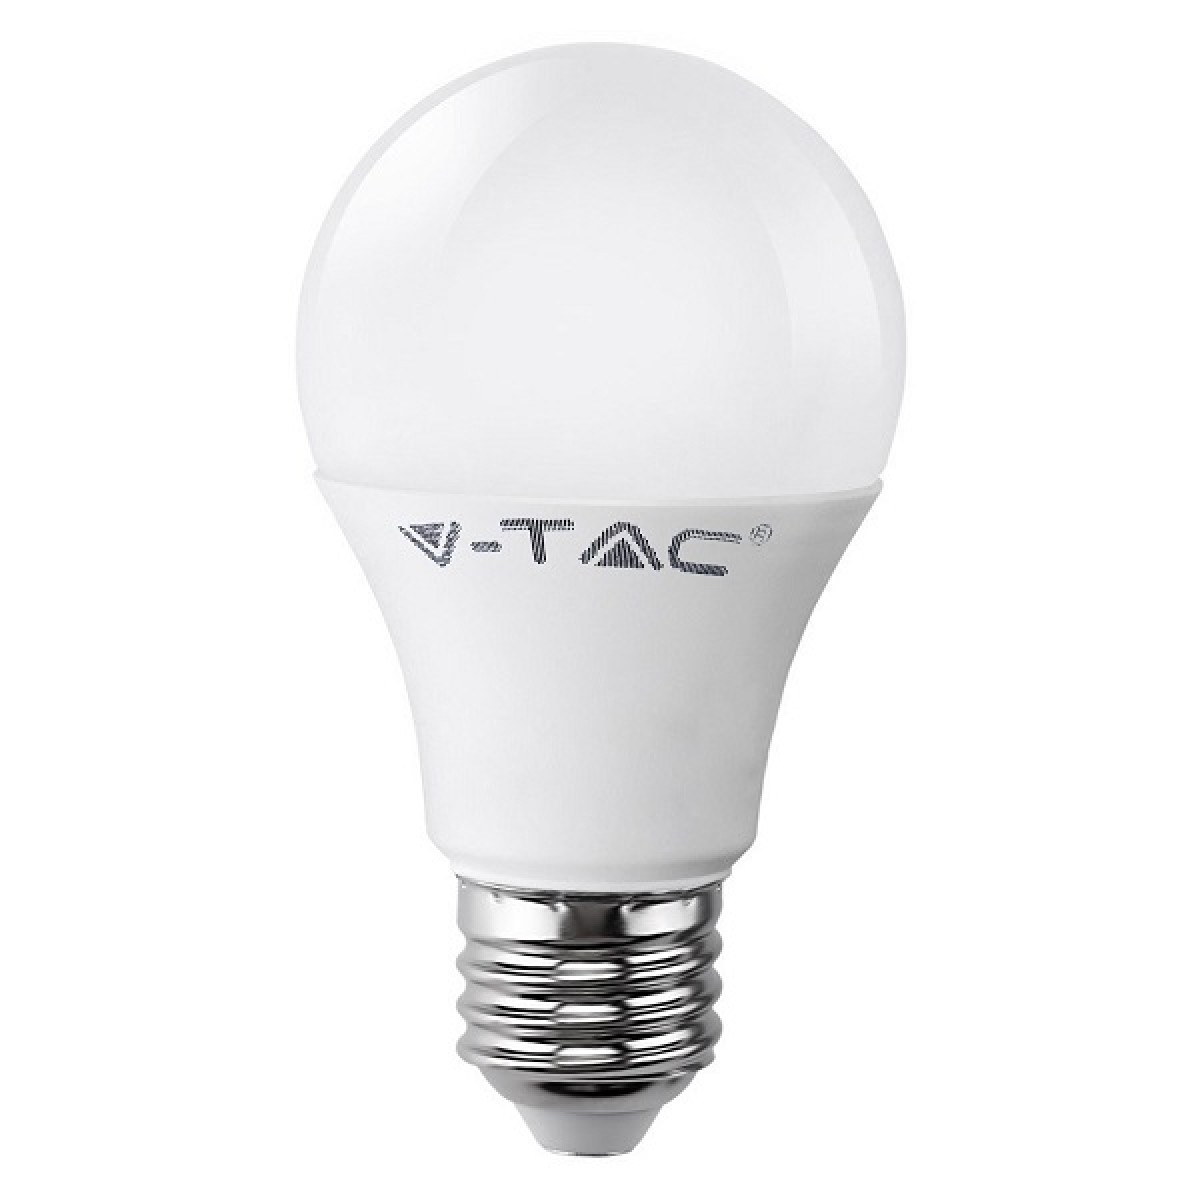 Kit 10 Lampadine led 8.5W Bulb A60 V-TAC attacco E27 Luce Naturale 4000K